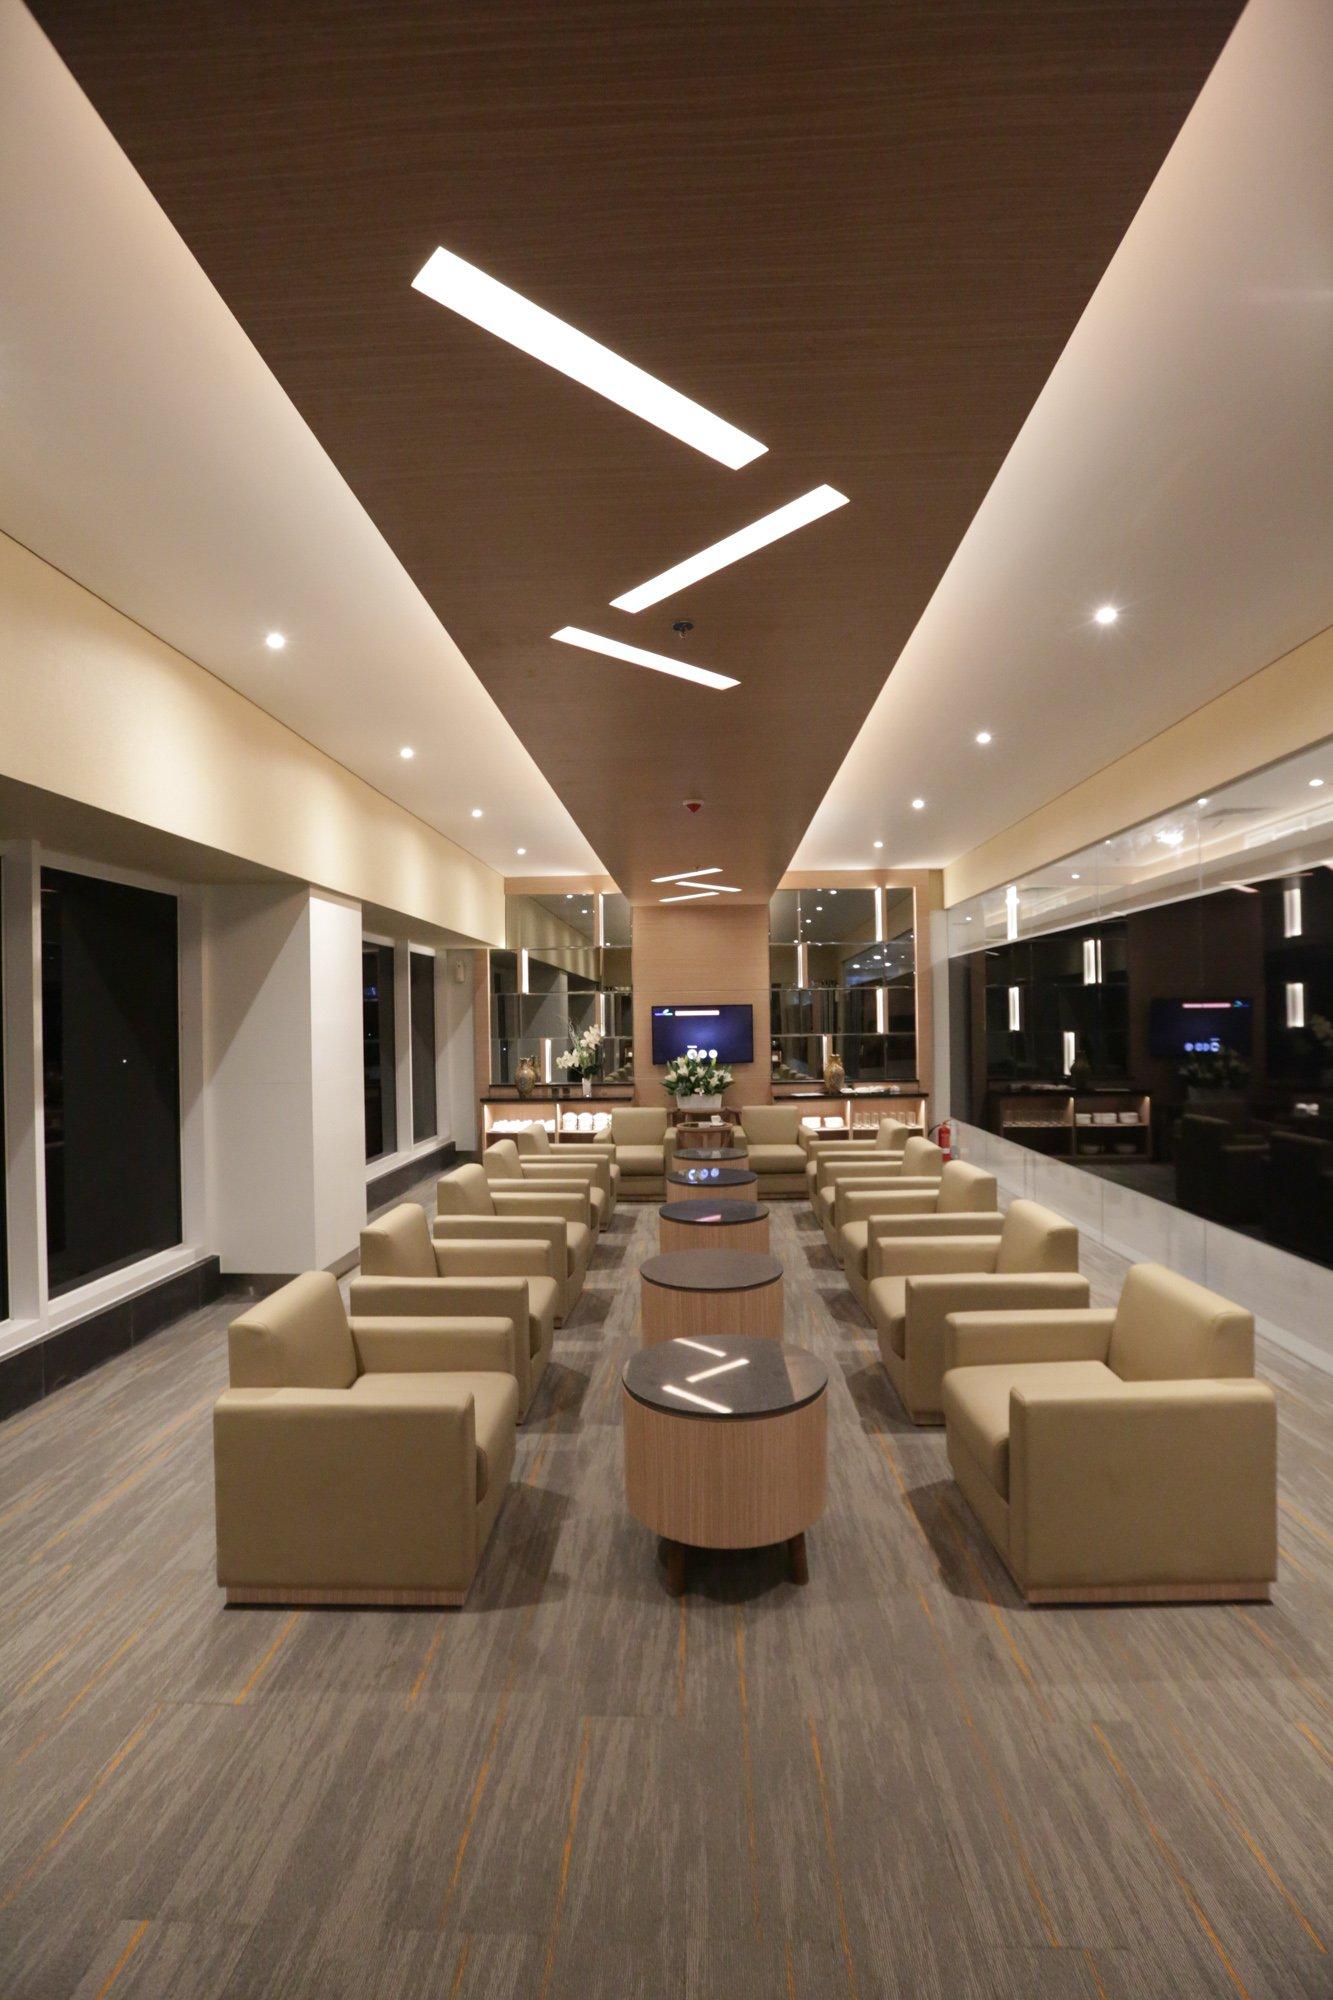 Concordia Lounge image 3 of 3